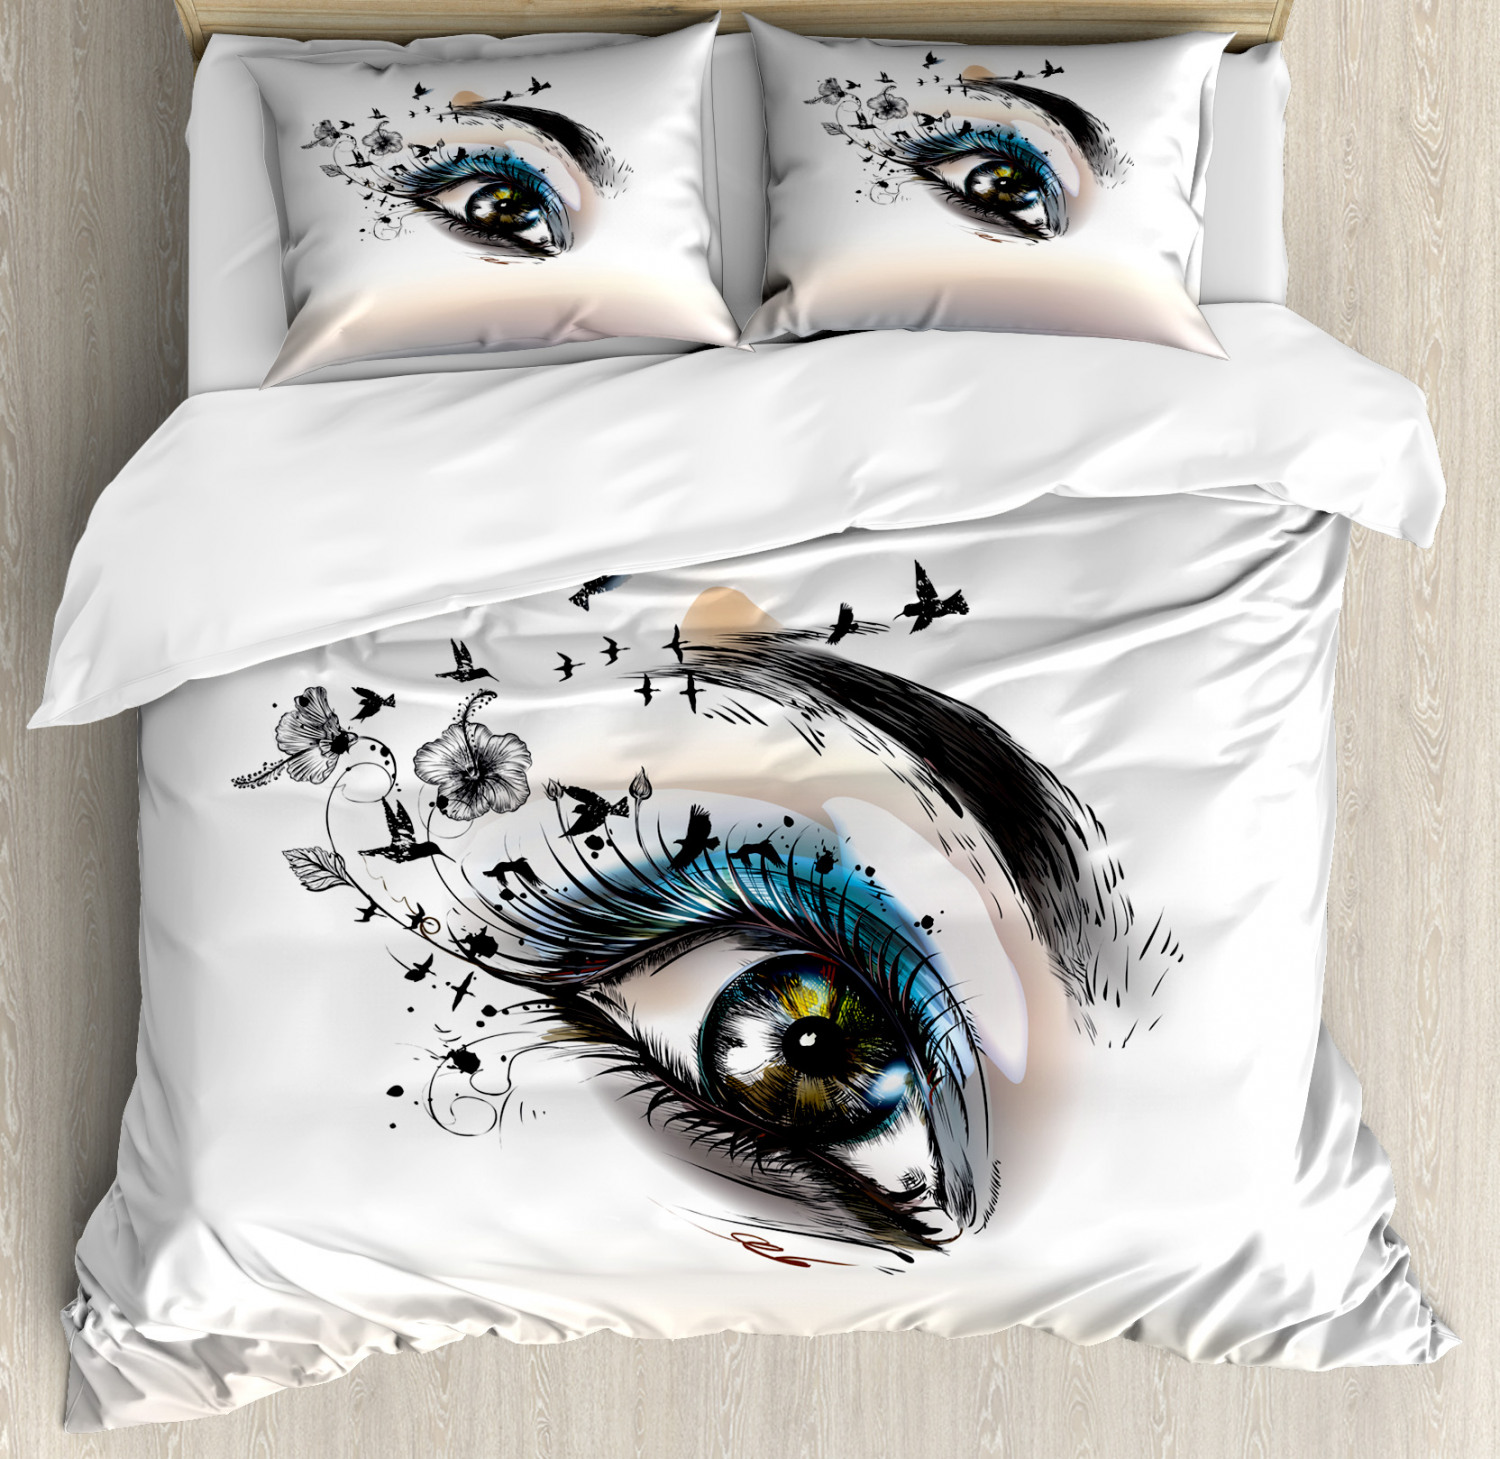 Grey Eyelash Comforter and Sham Set - Twin/Twin XL